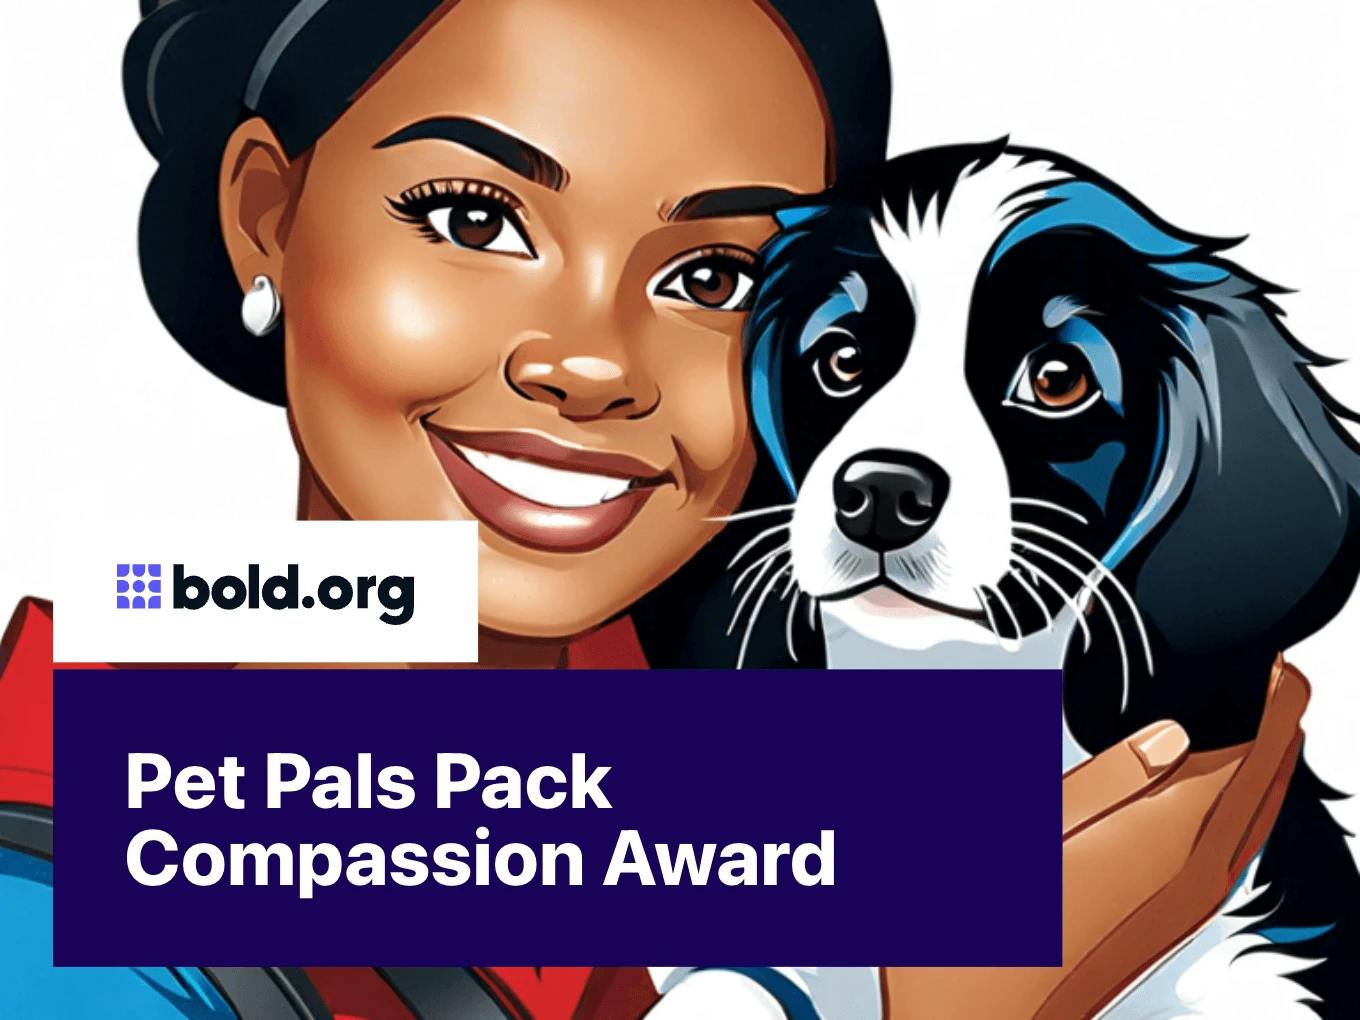 Pet Pals Pack Compassion Award